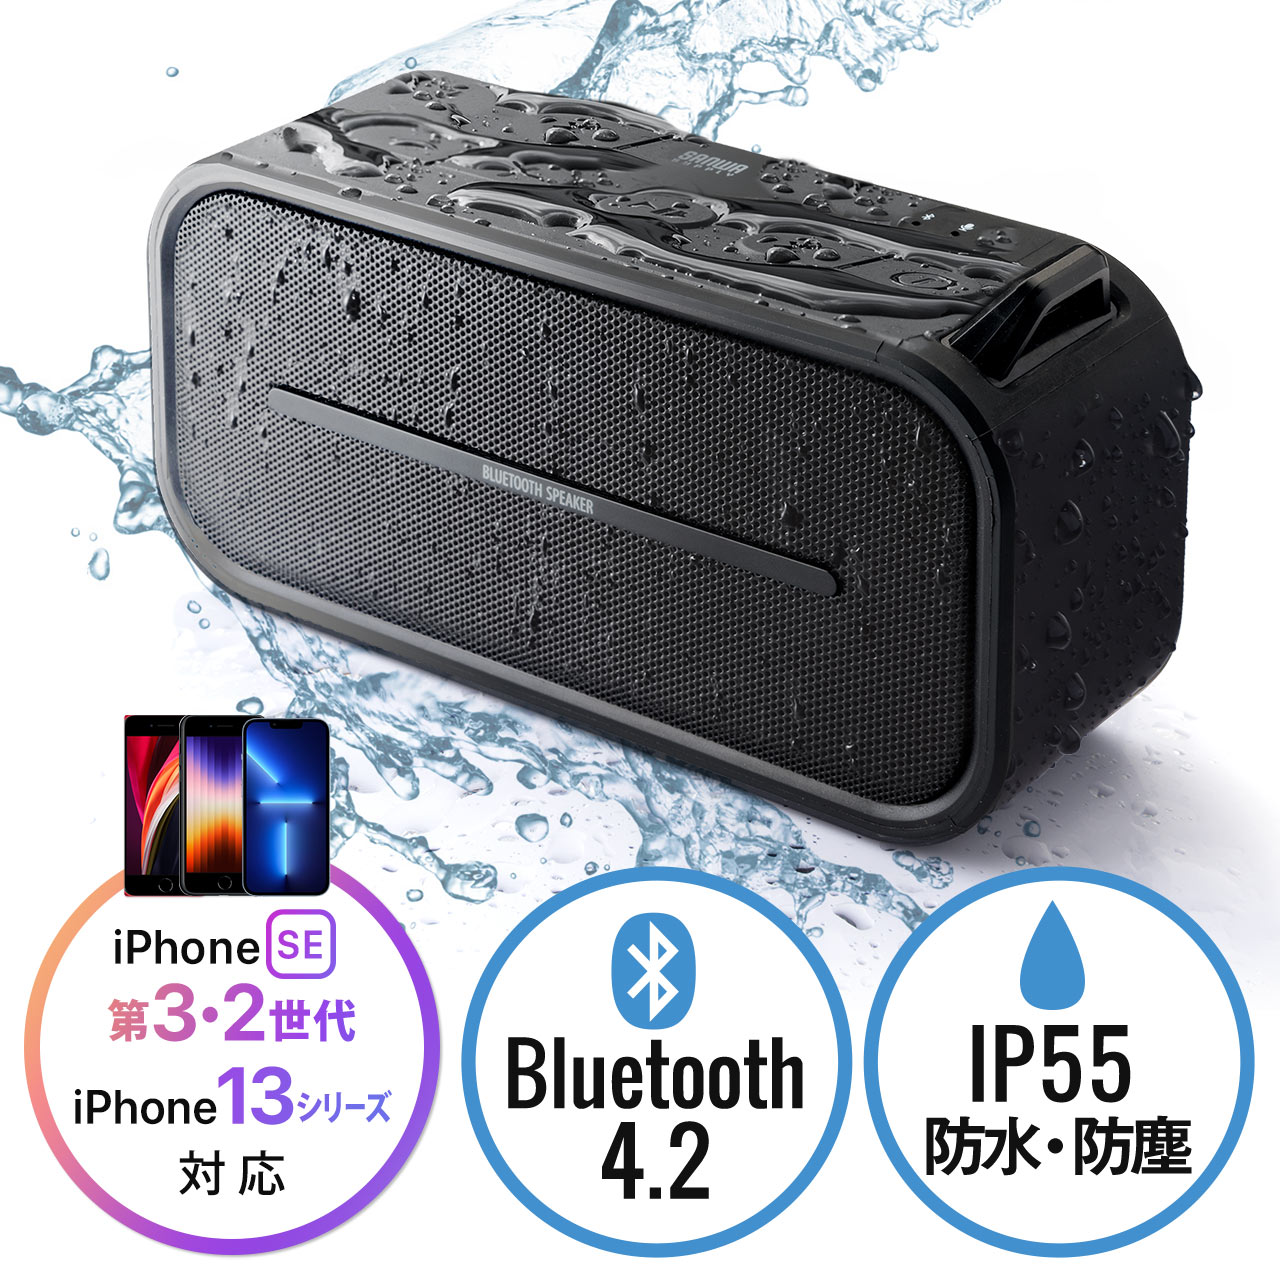 BluetoothXs[J[ hho Bluetooth 4.2 microSD MP3Đ 6Wo ubN 400-SP069BK